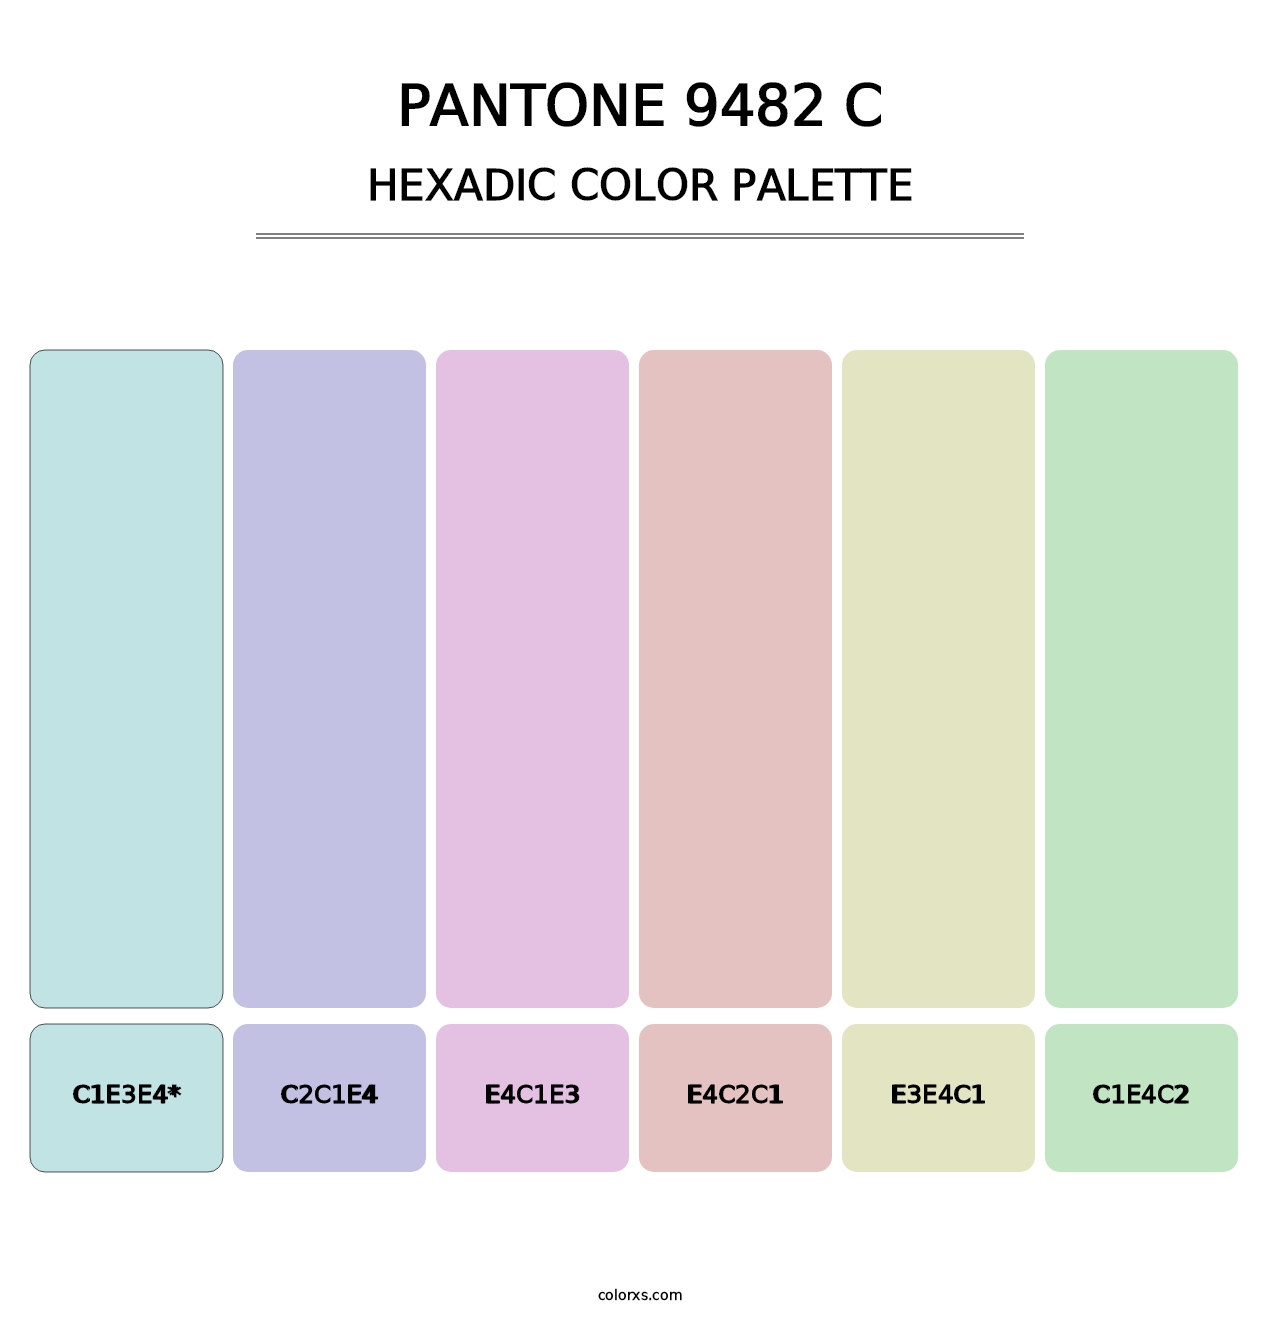 PANTONE 9482 C - Hexadic Color Palette